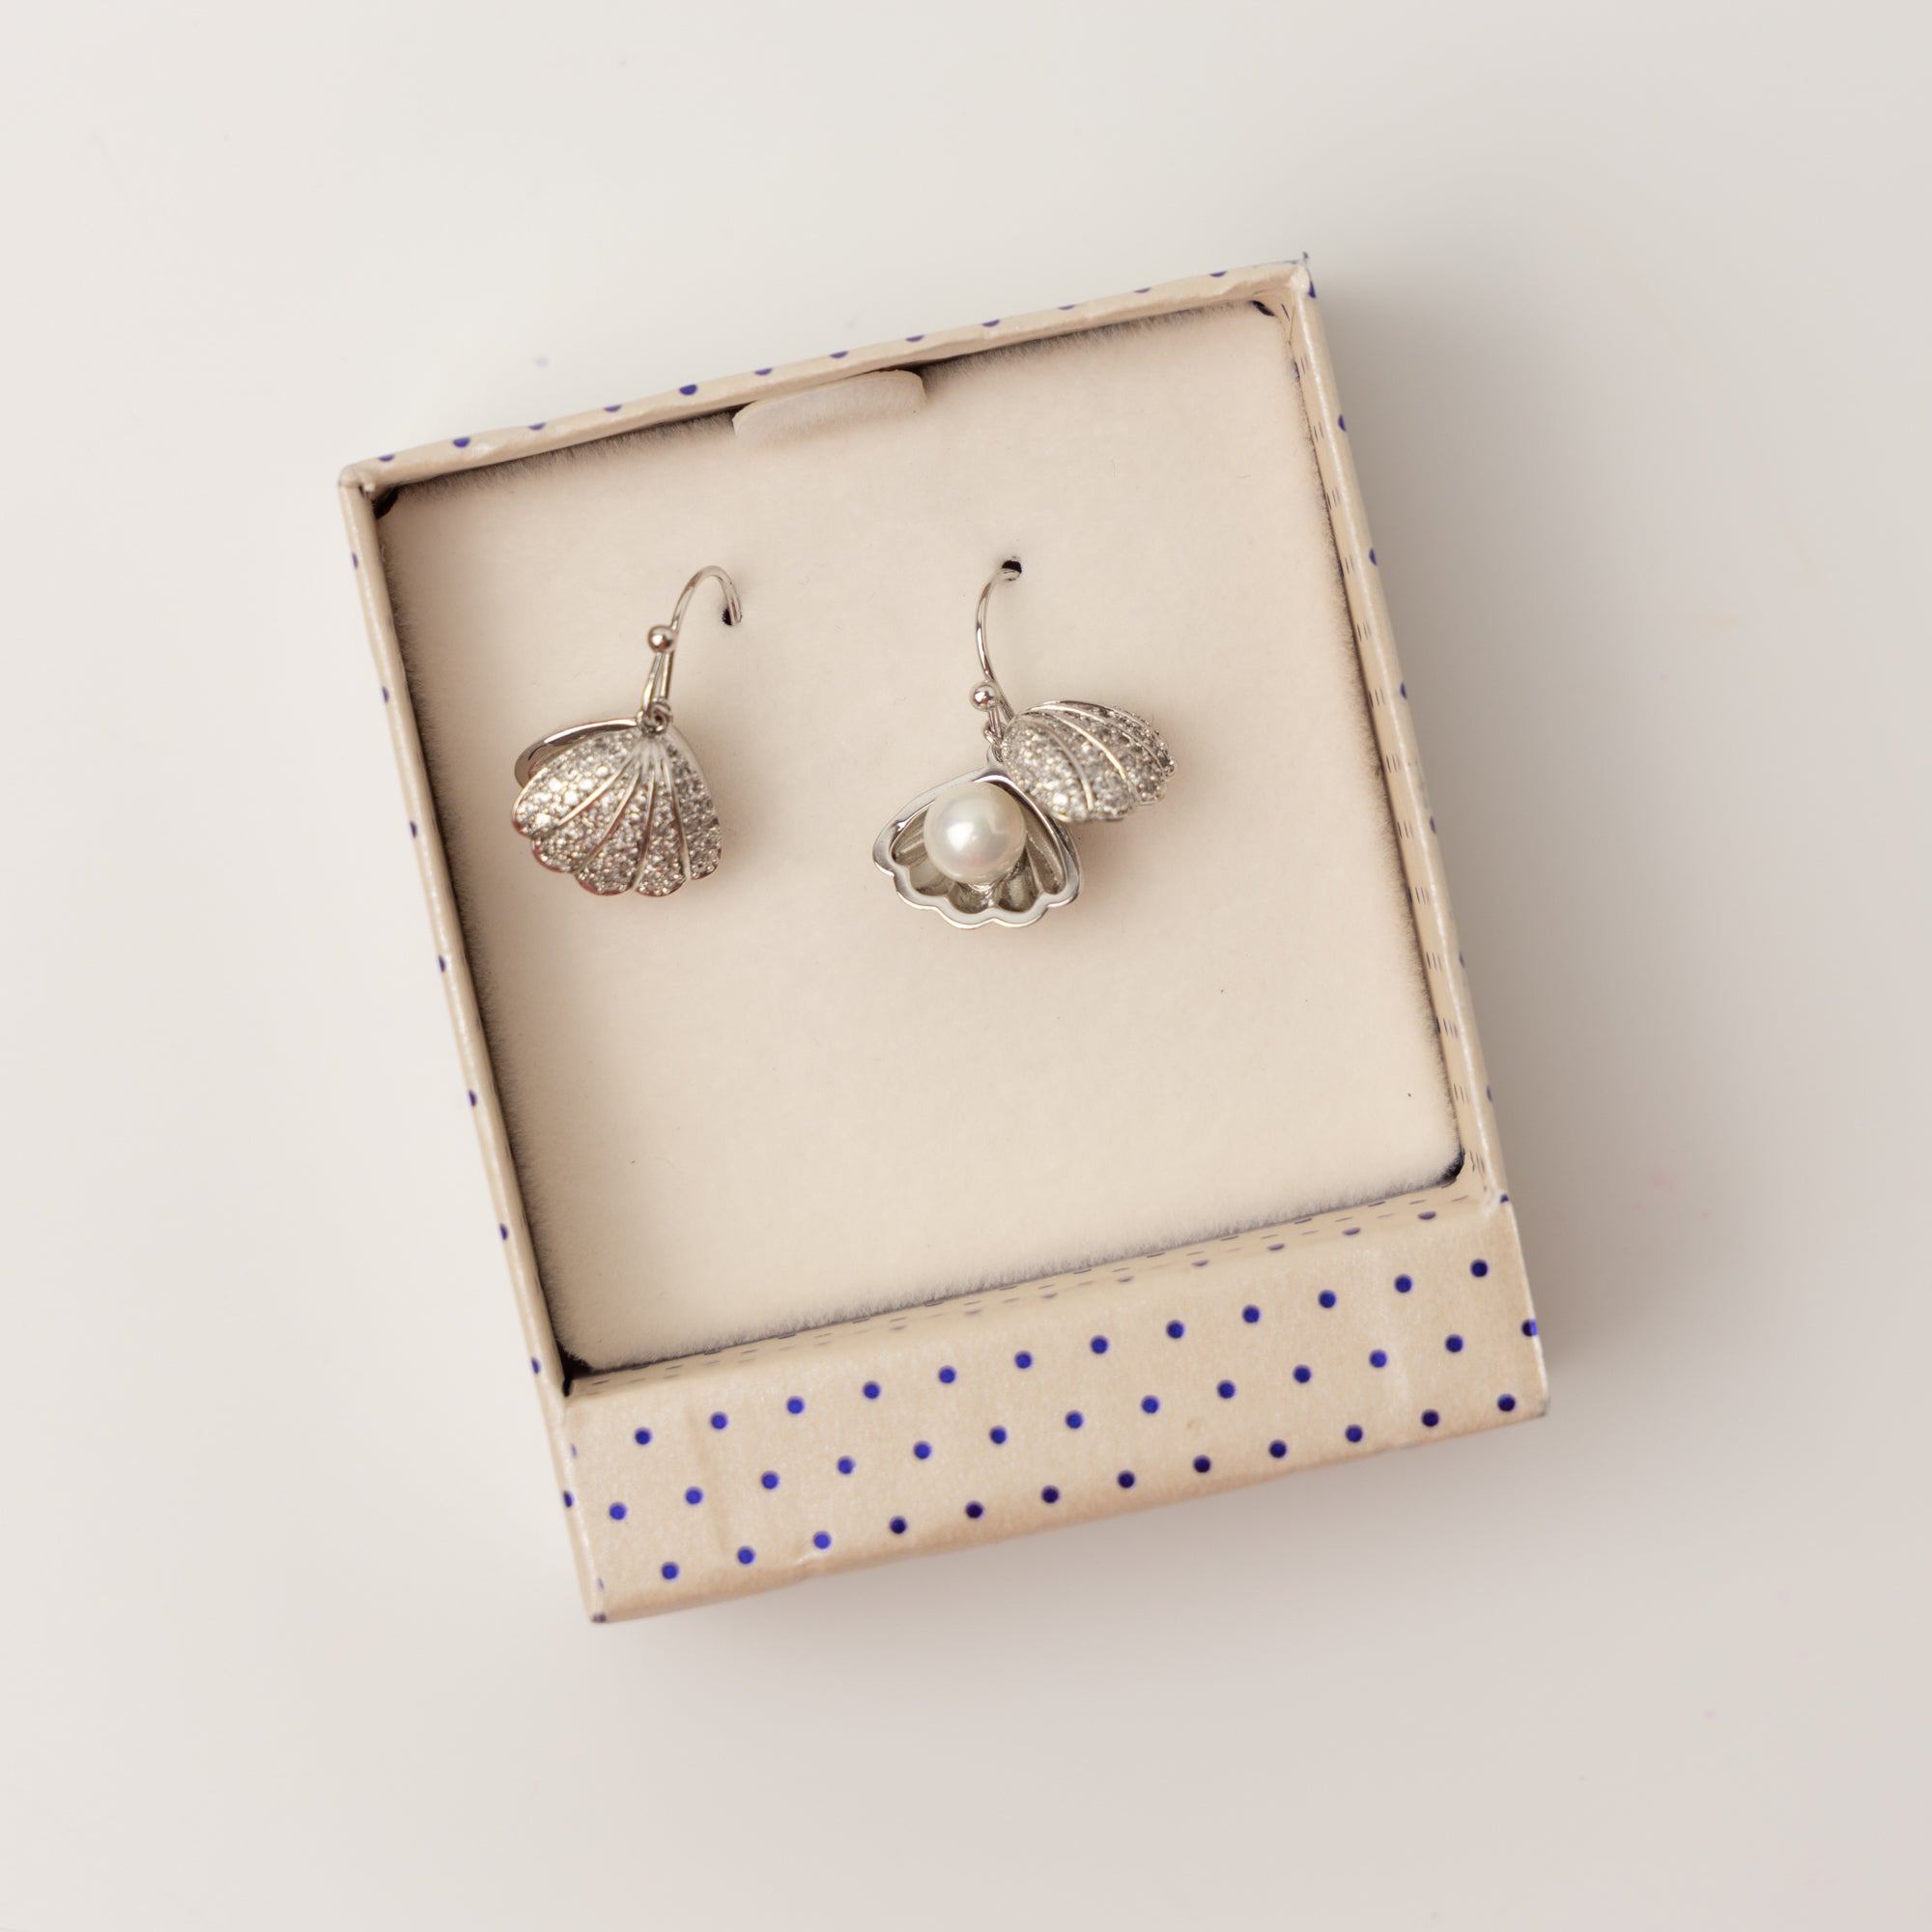 Diamanté Shell Earrings with Hidden Pearls